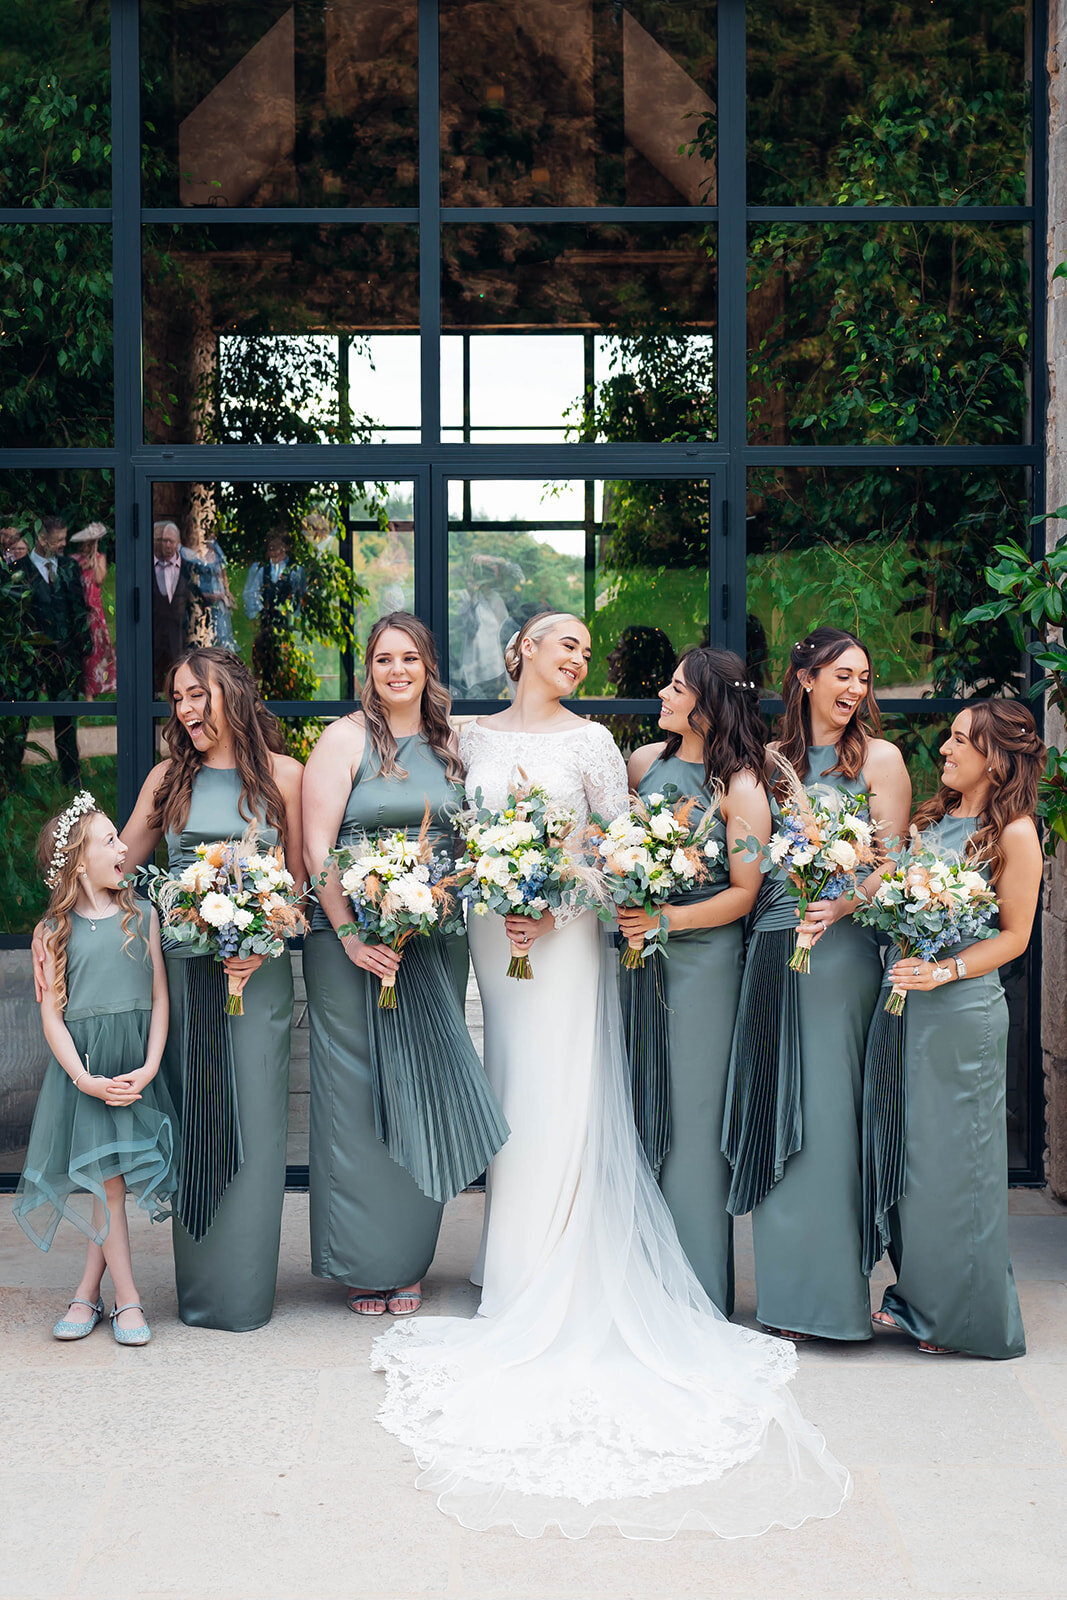 bride-bridesmaids-in-green-laughing-celebrating